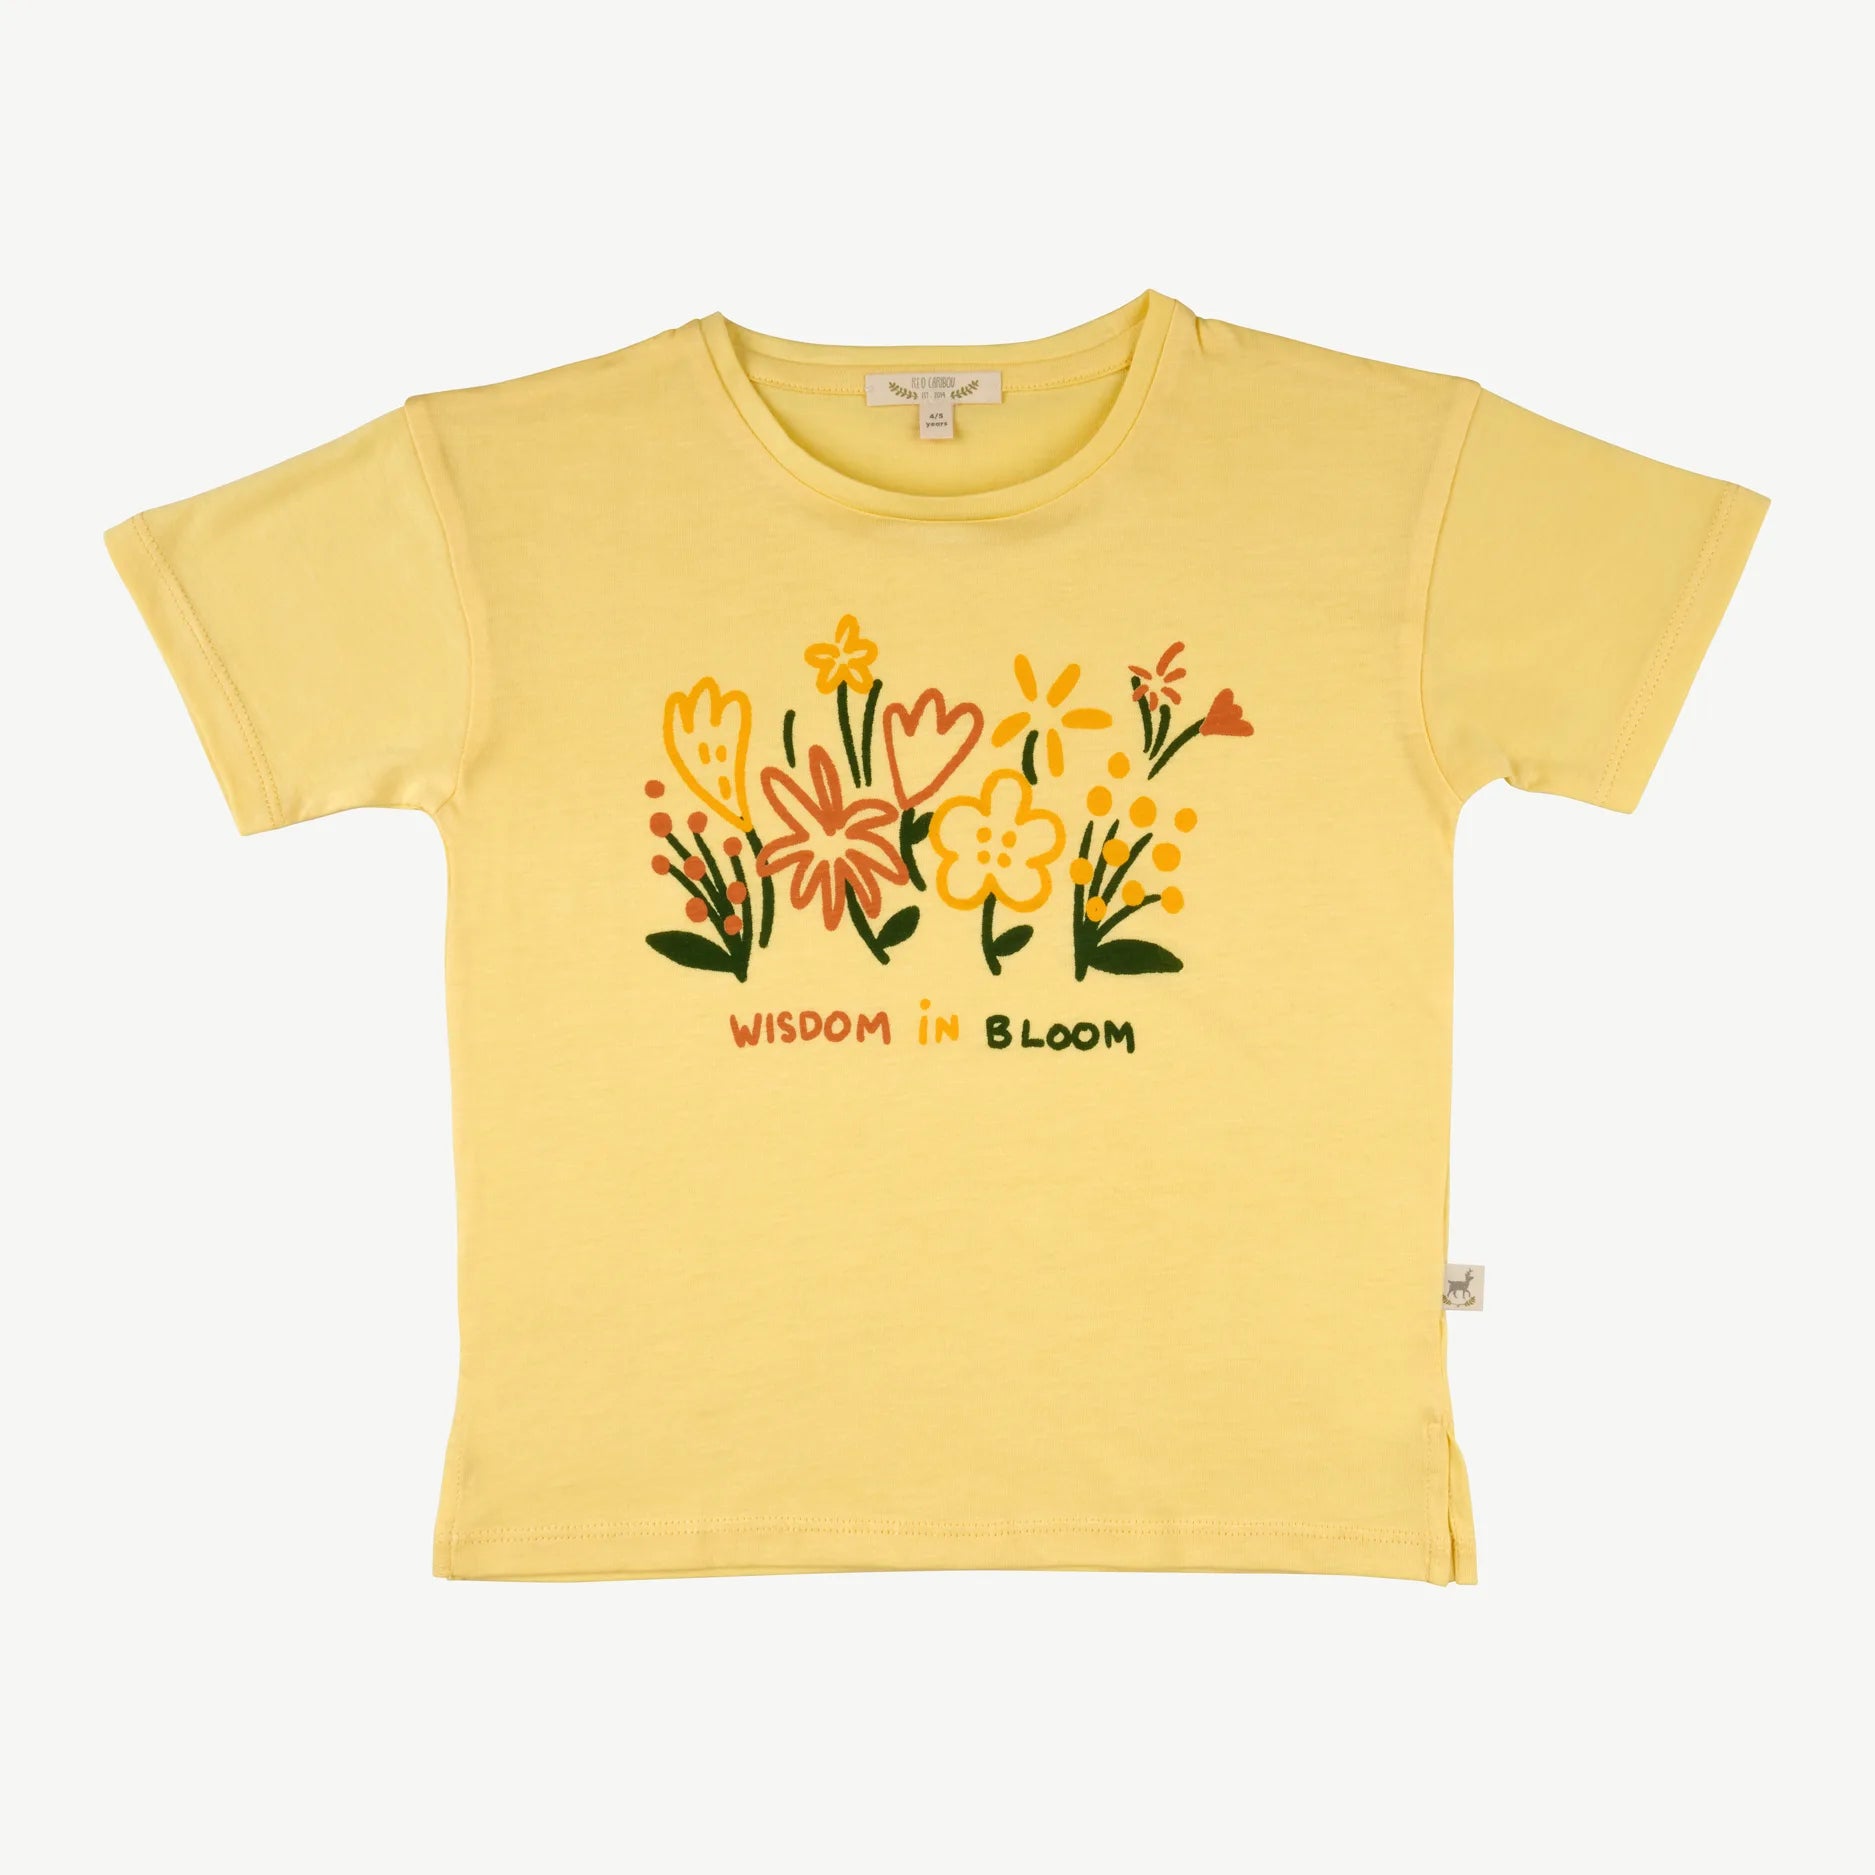 'wisdom in bloom' sundress short sleeve t-shirt